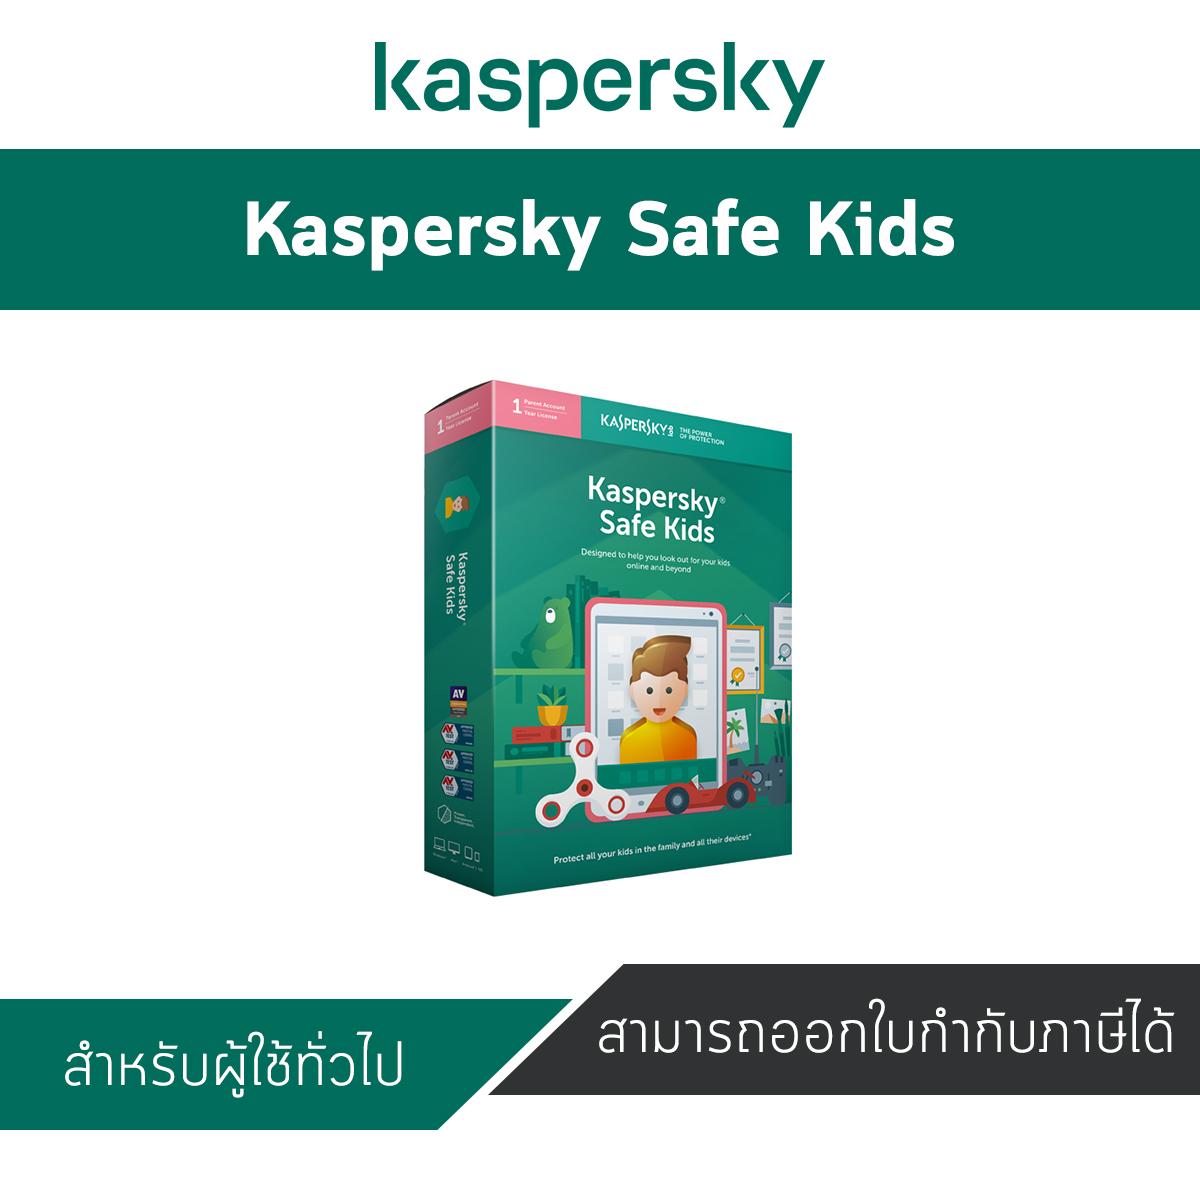 Kaspersky Safe Kids (1 บัญชีผู้ใช้ / 1ปี) ติดตามบุตรหลานของคุณออนไลน์และที่อื่นๆ